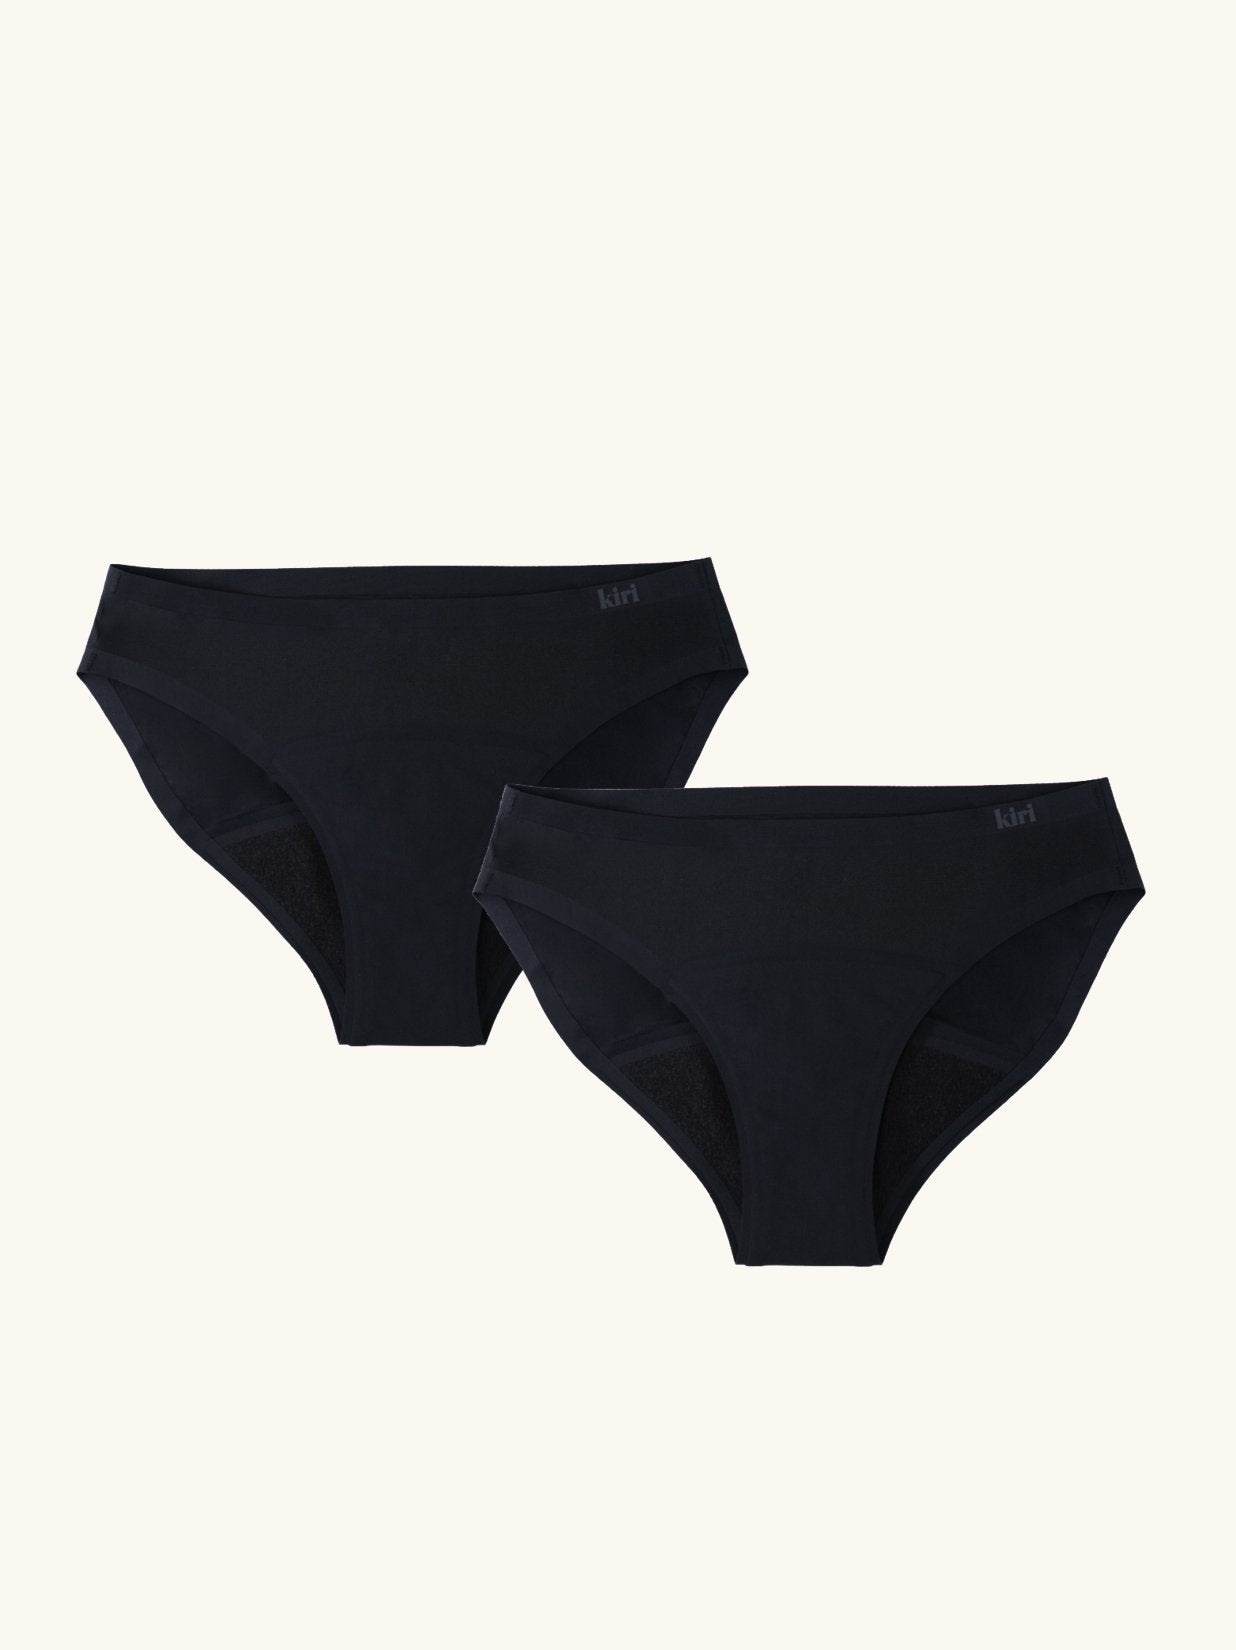 Kiri Daywear Panties Bundle Set